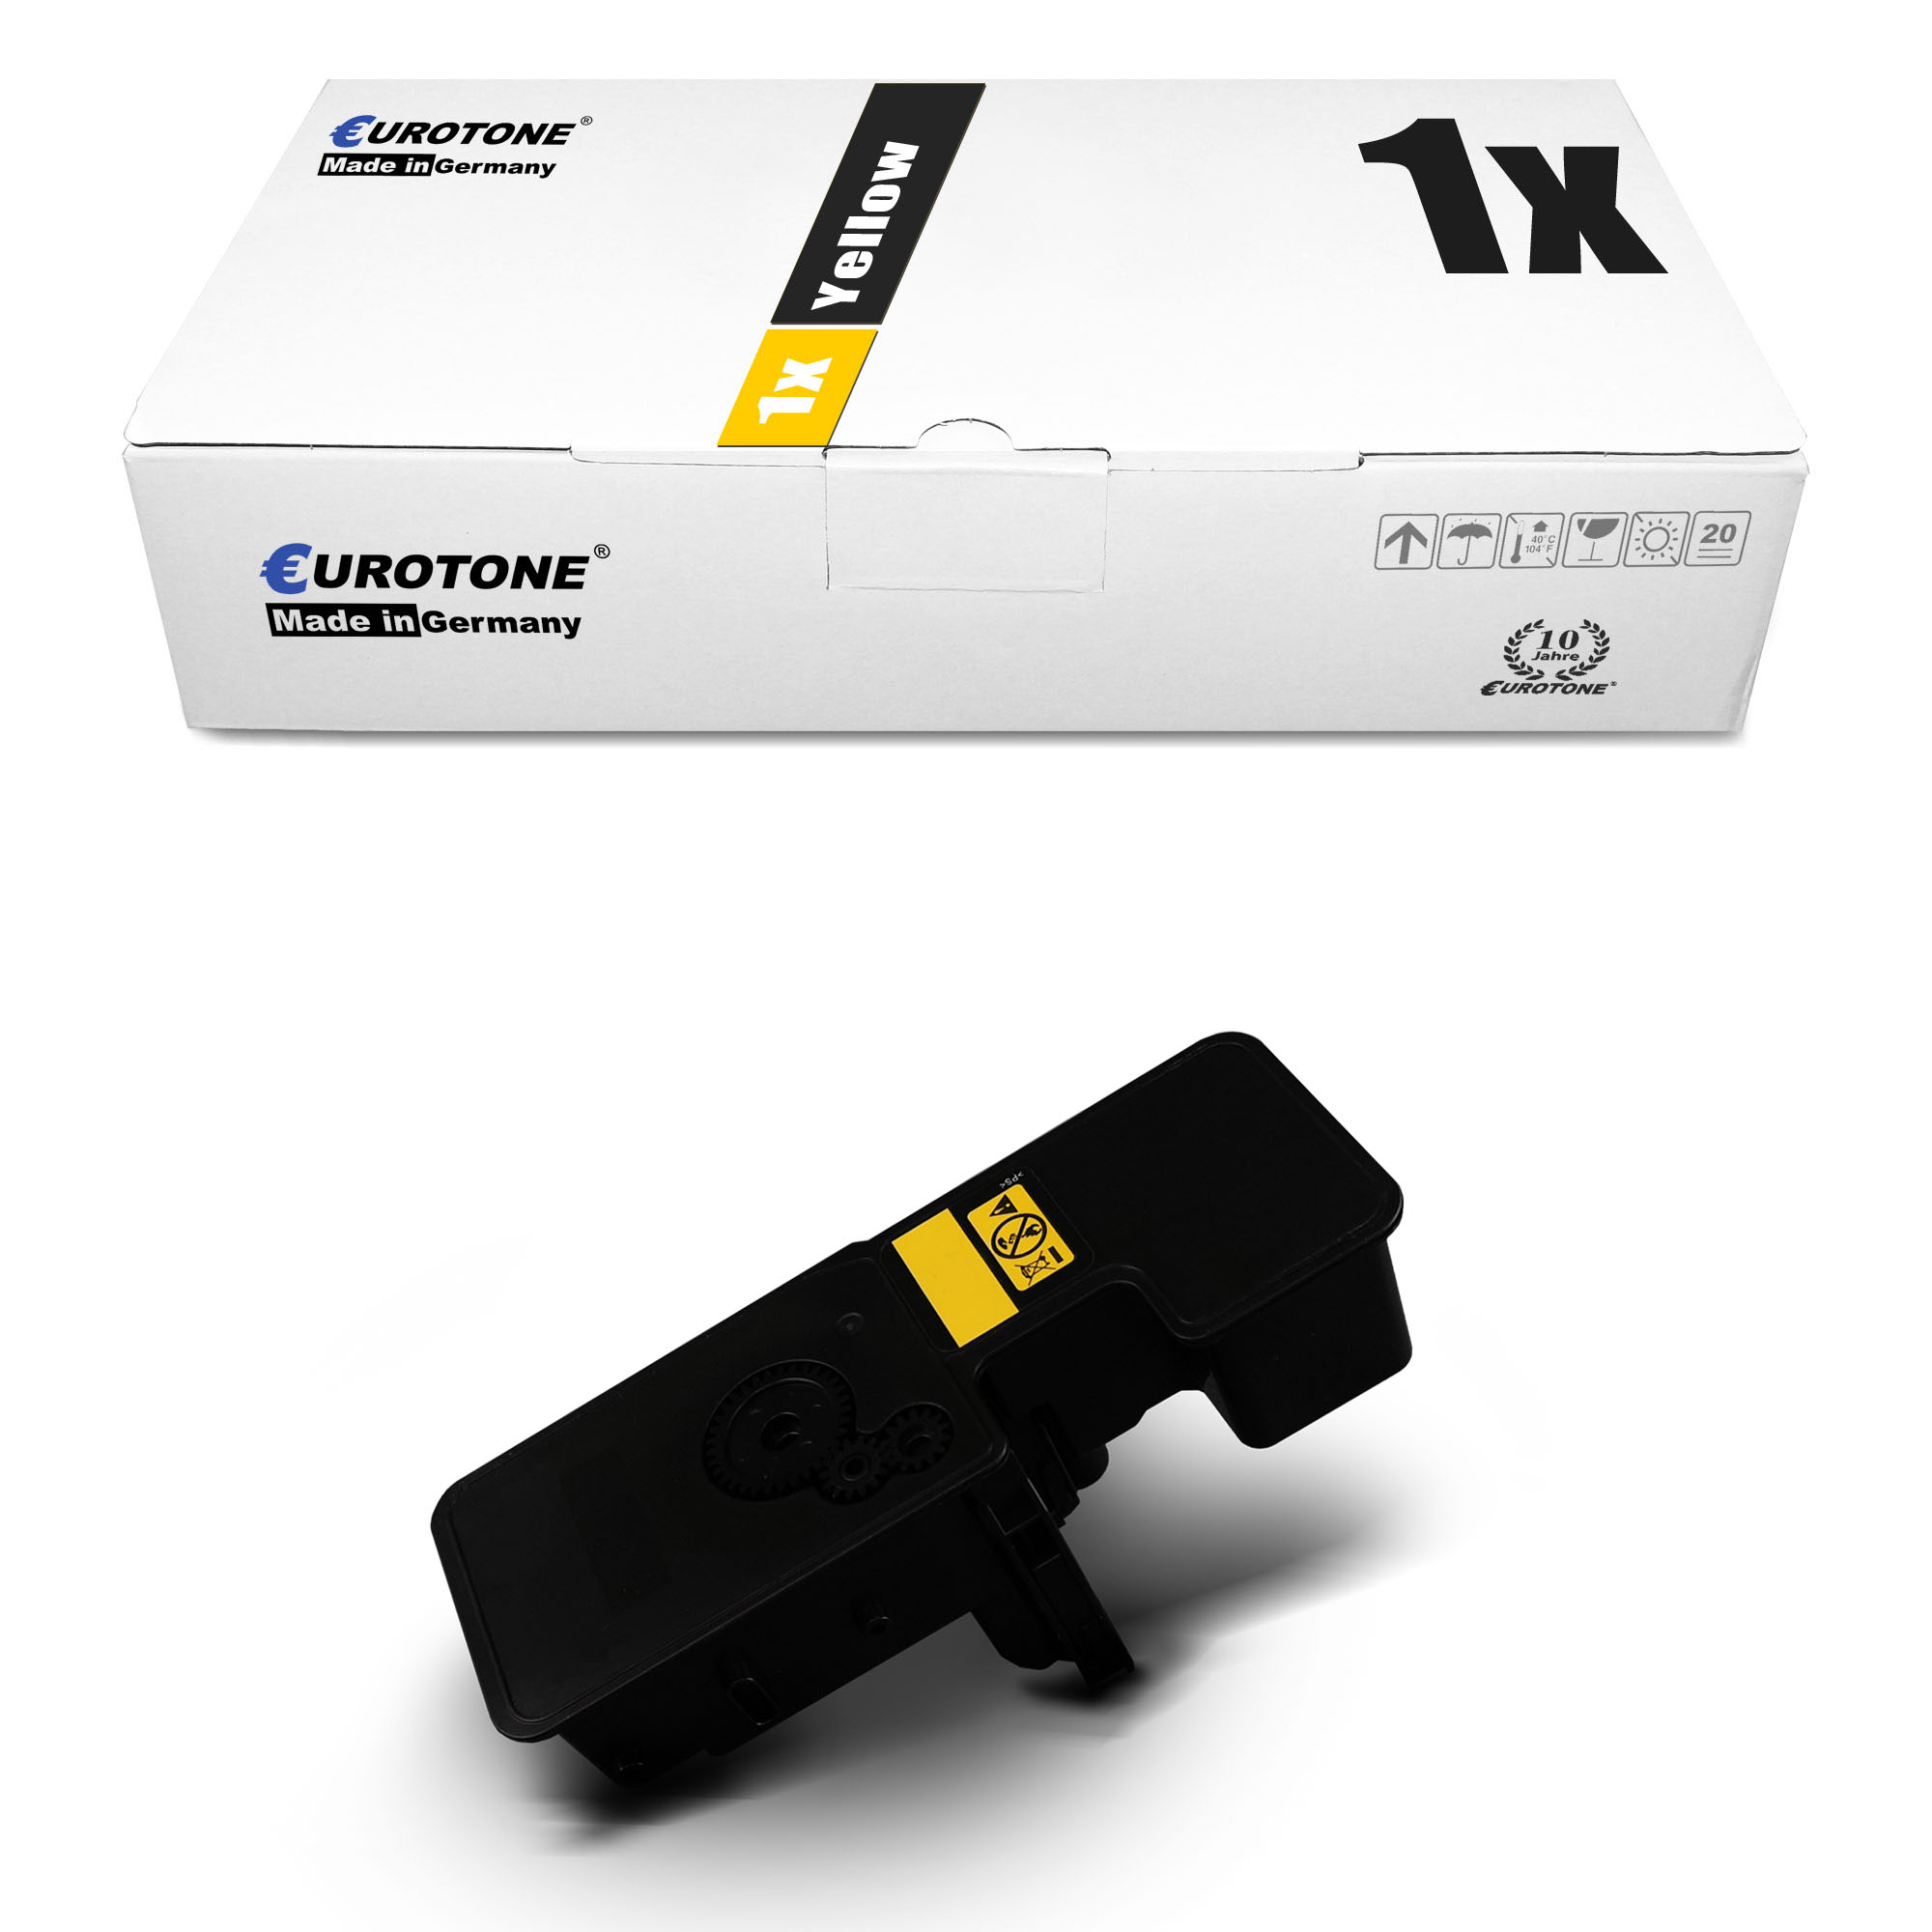 / 2R9ANL1) TK5220 Yellow ET3981645 TK-5220Y Cartridge / EUROTONE Toner (Kyocera